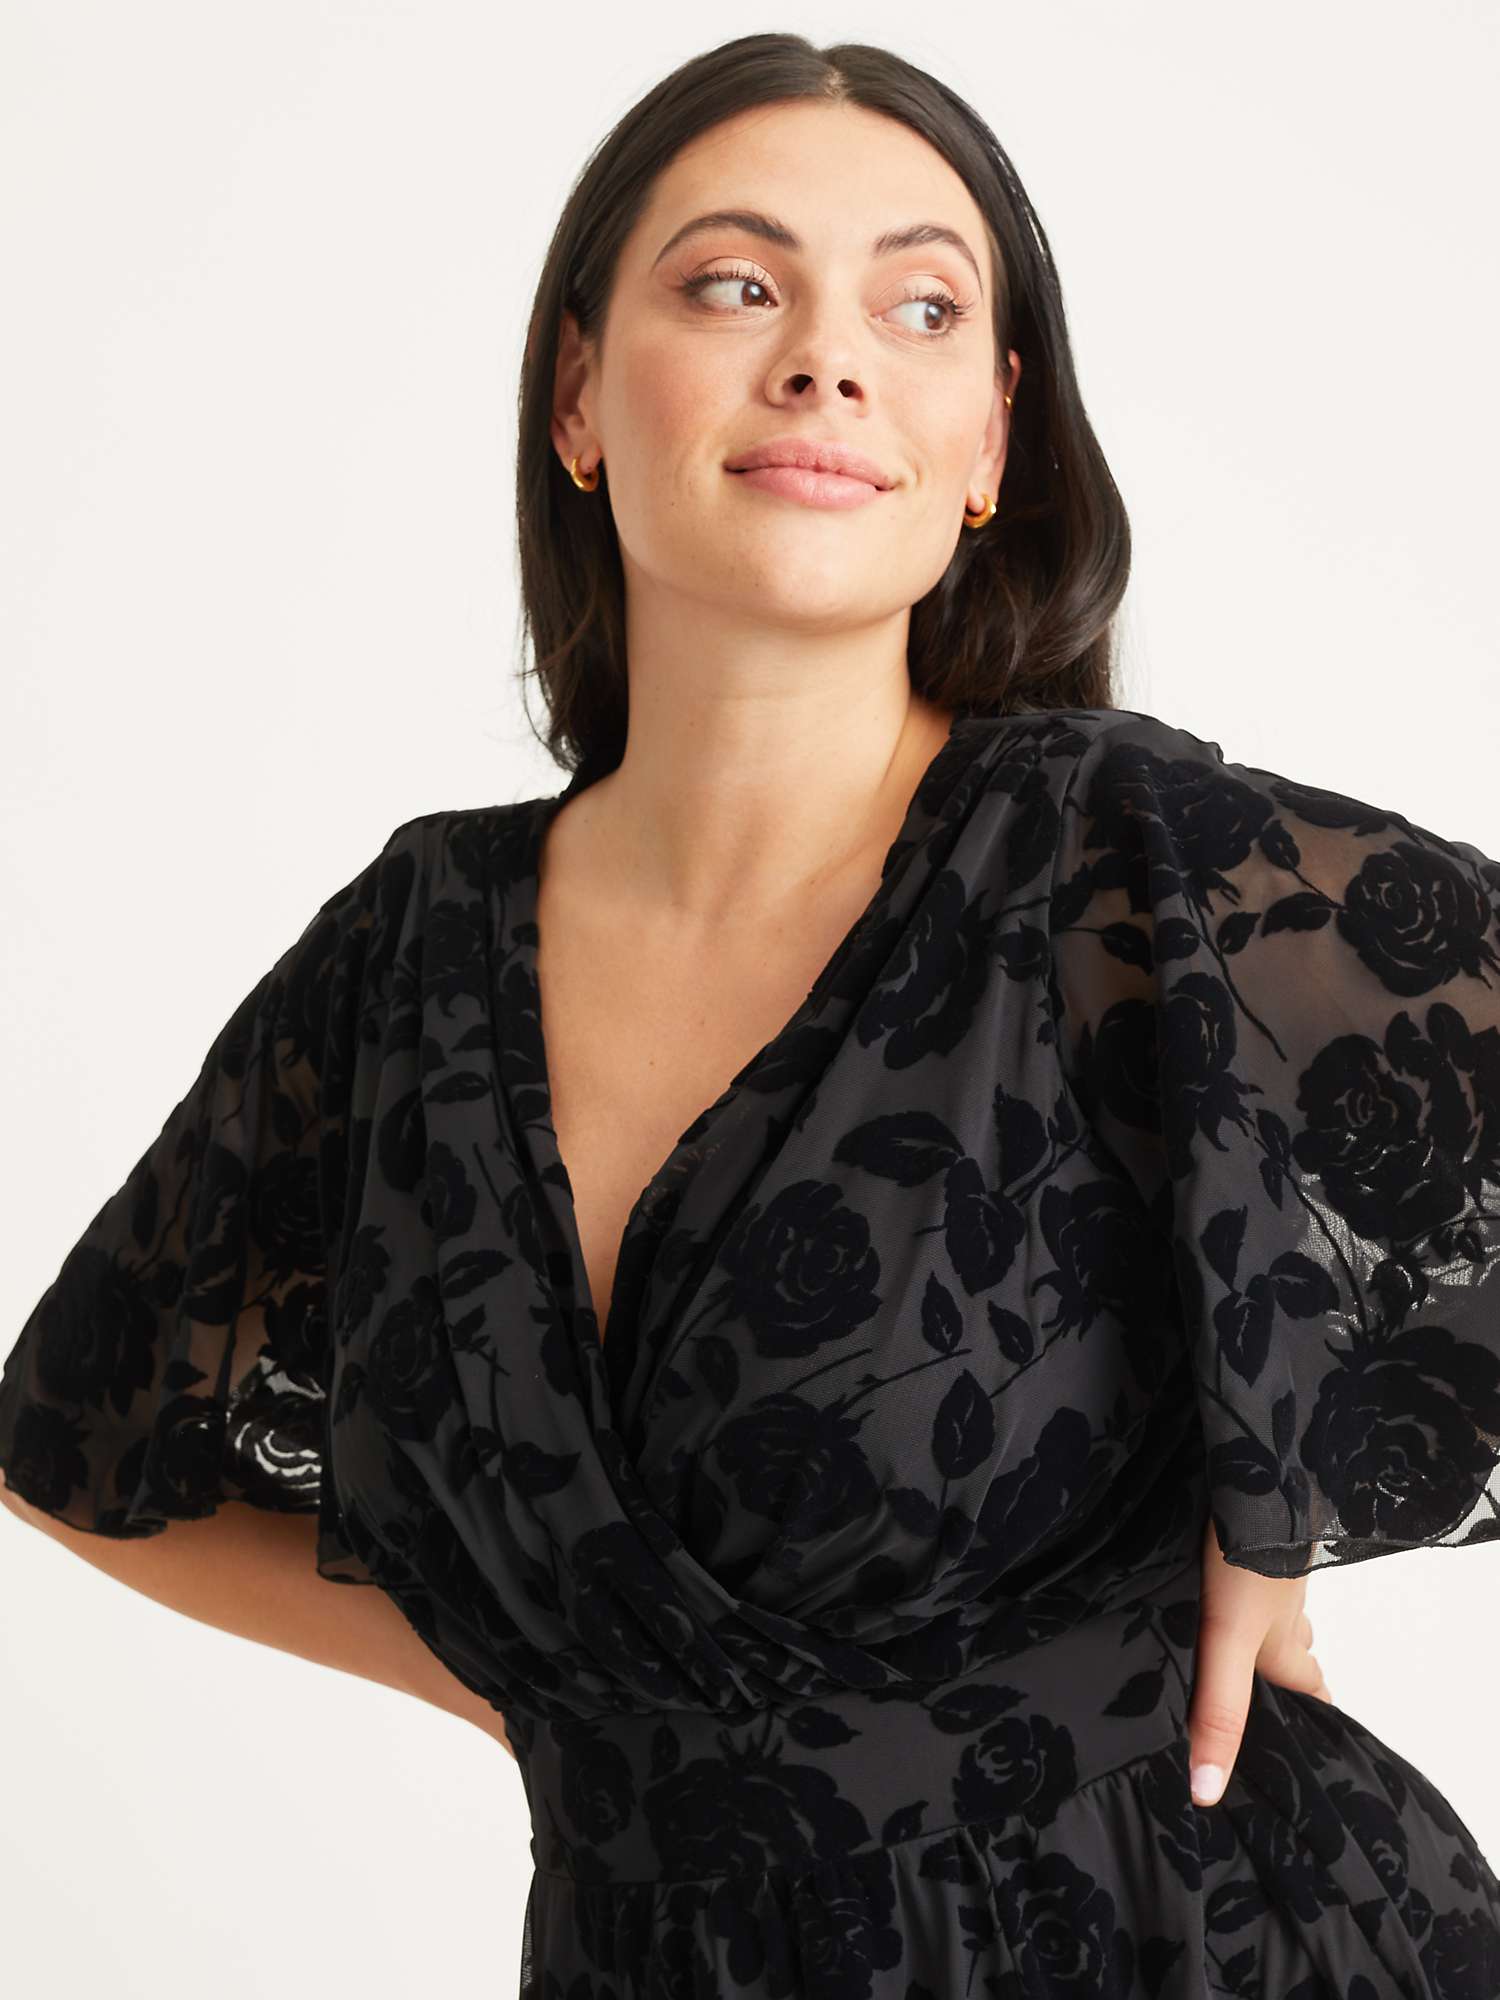 Buy Scarlett & Jo Julie Flock Hanky Hem Midi Dress, Black Online at johnlewis.com